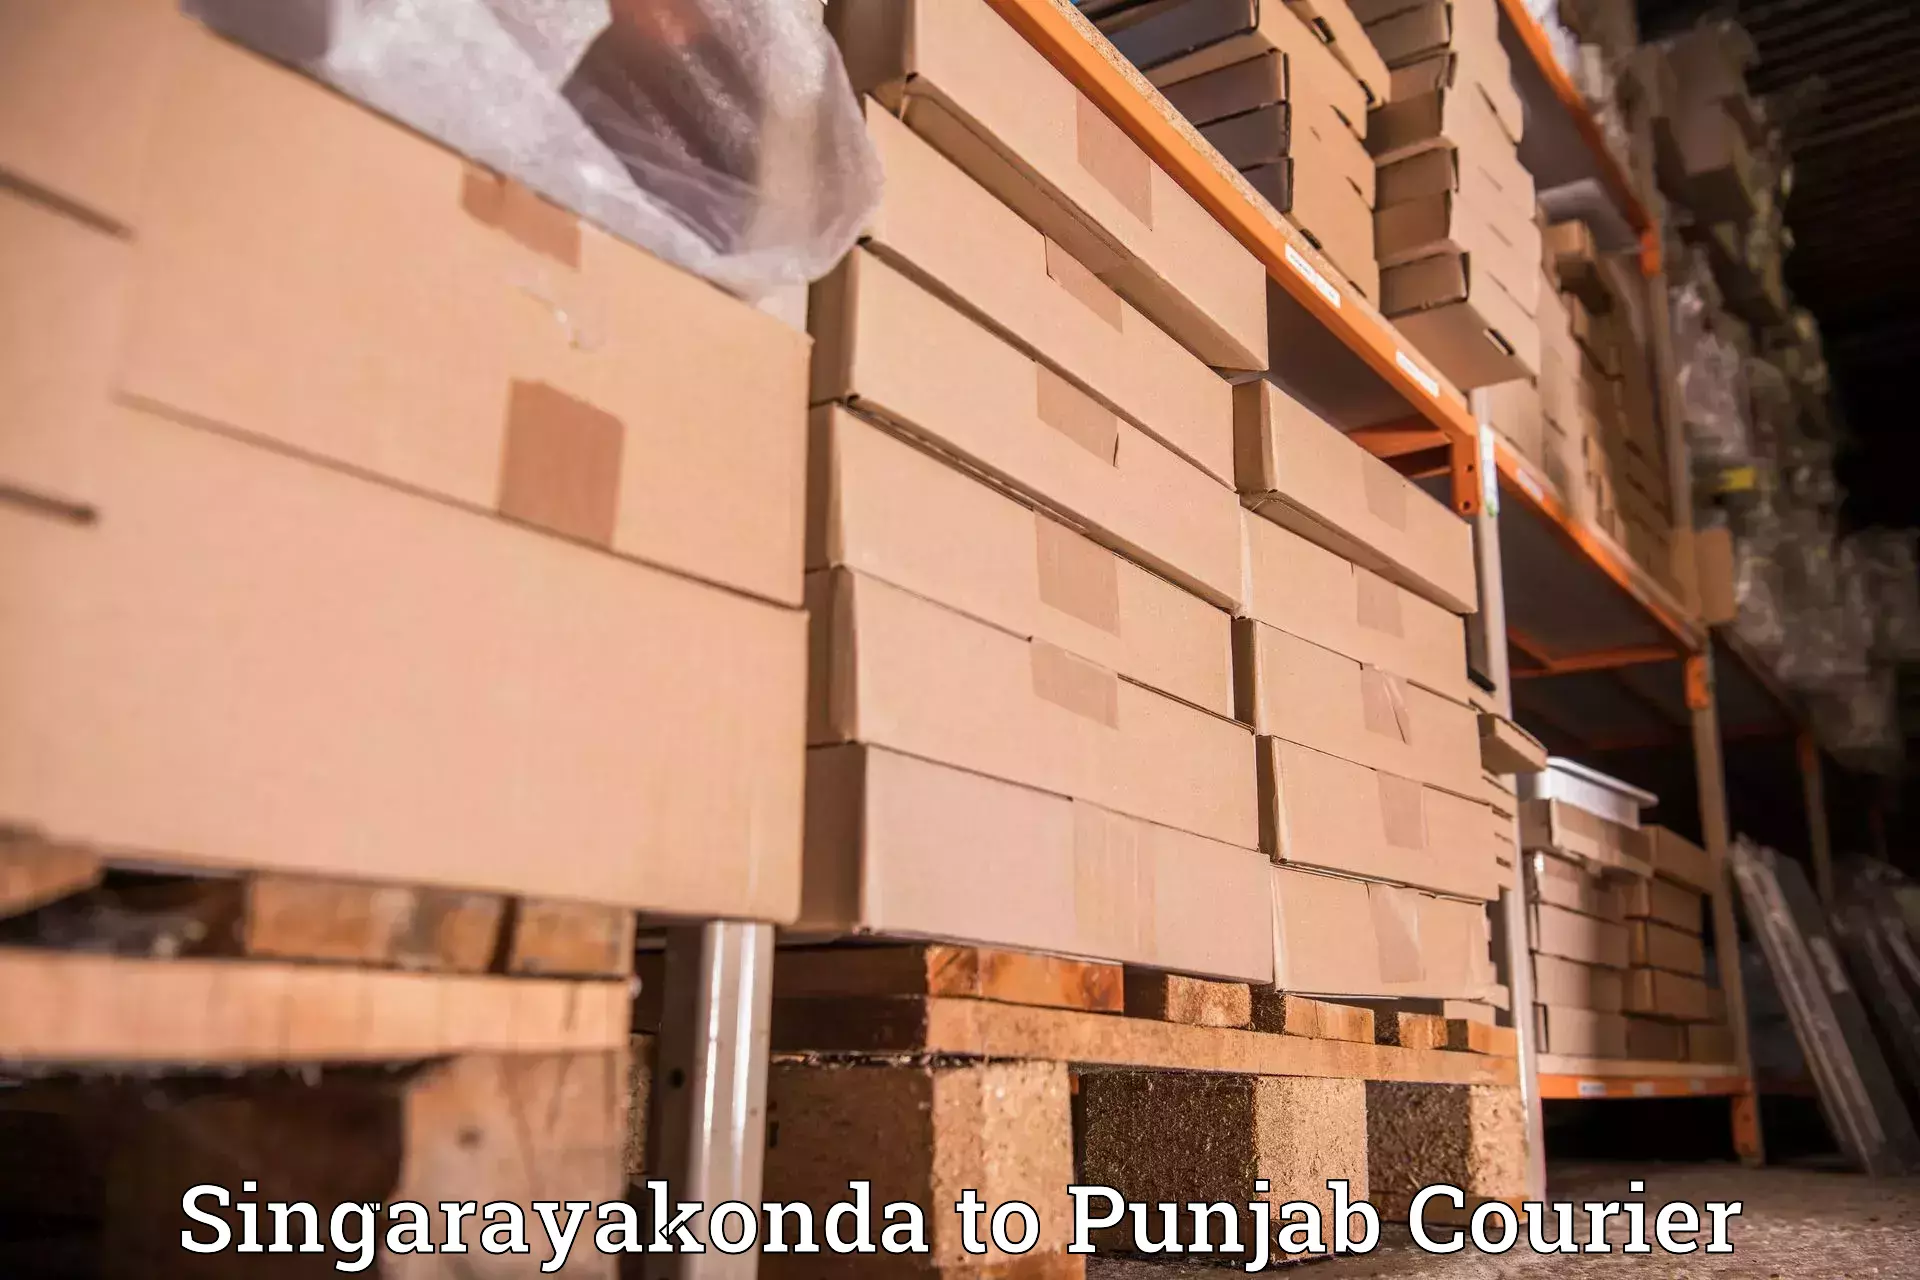 Holiday shipping services in Singarayakonda to Punjab